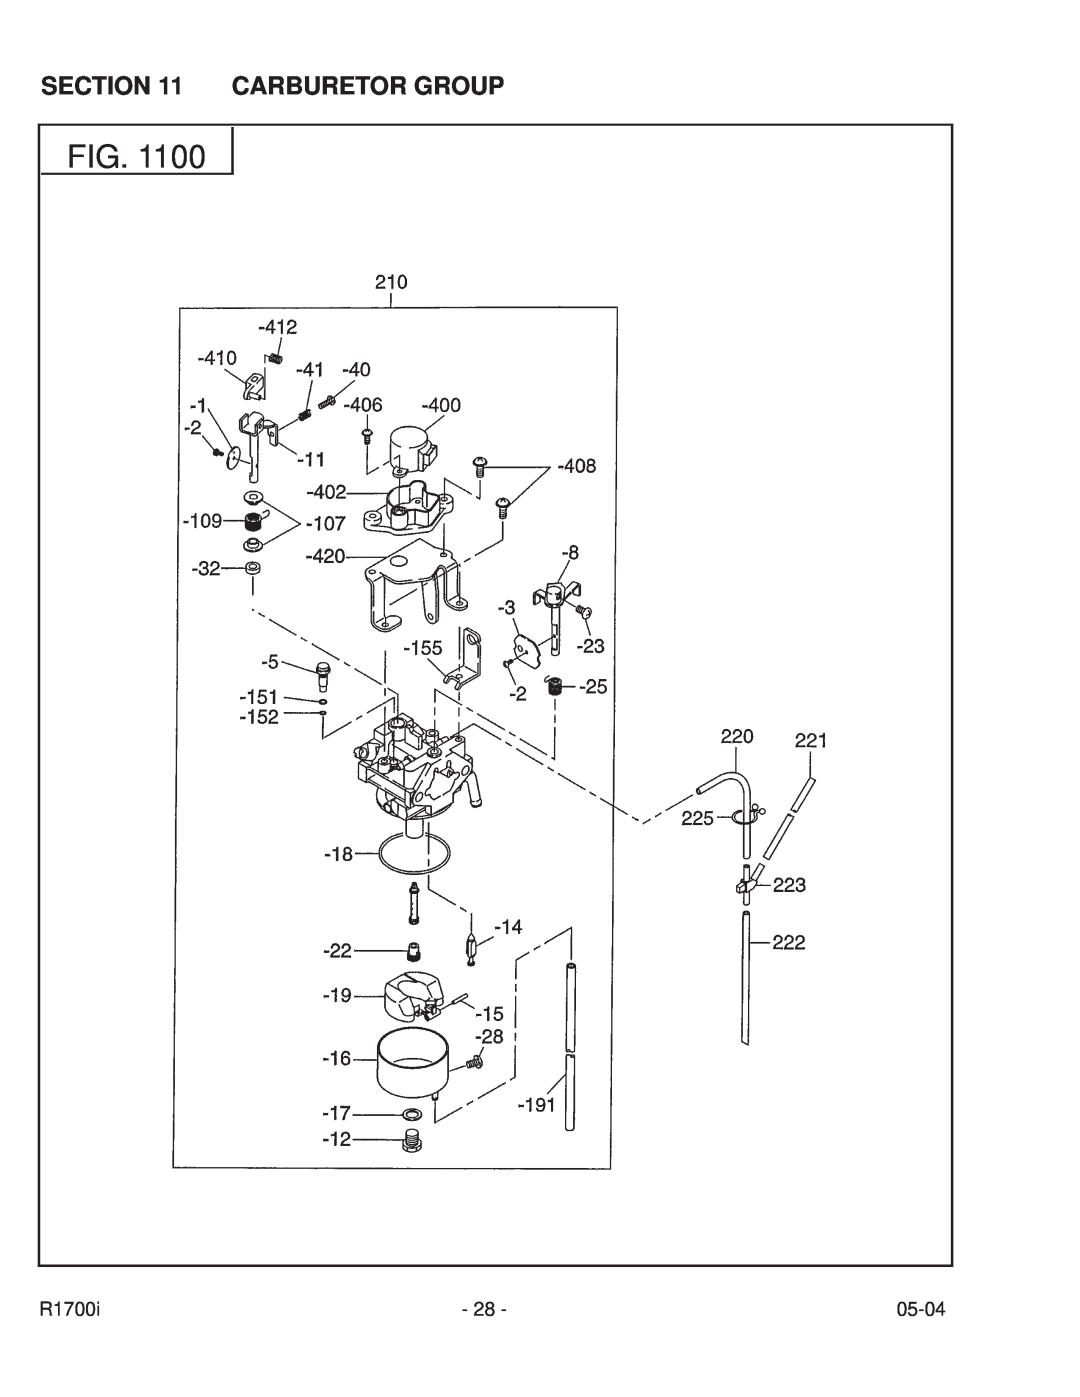 Subaru Robin Power Products PUB-GP6050 manual Carburetor Group, R1700i, 05-04 